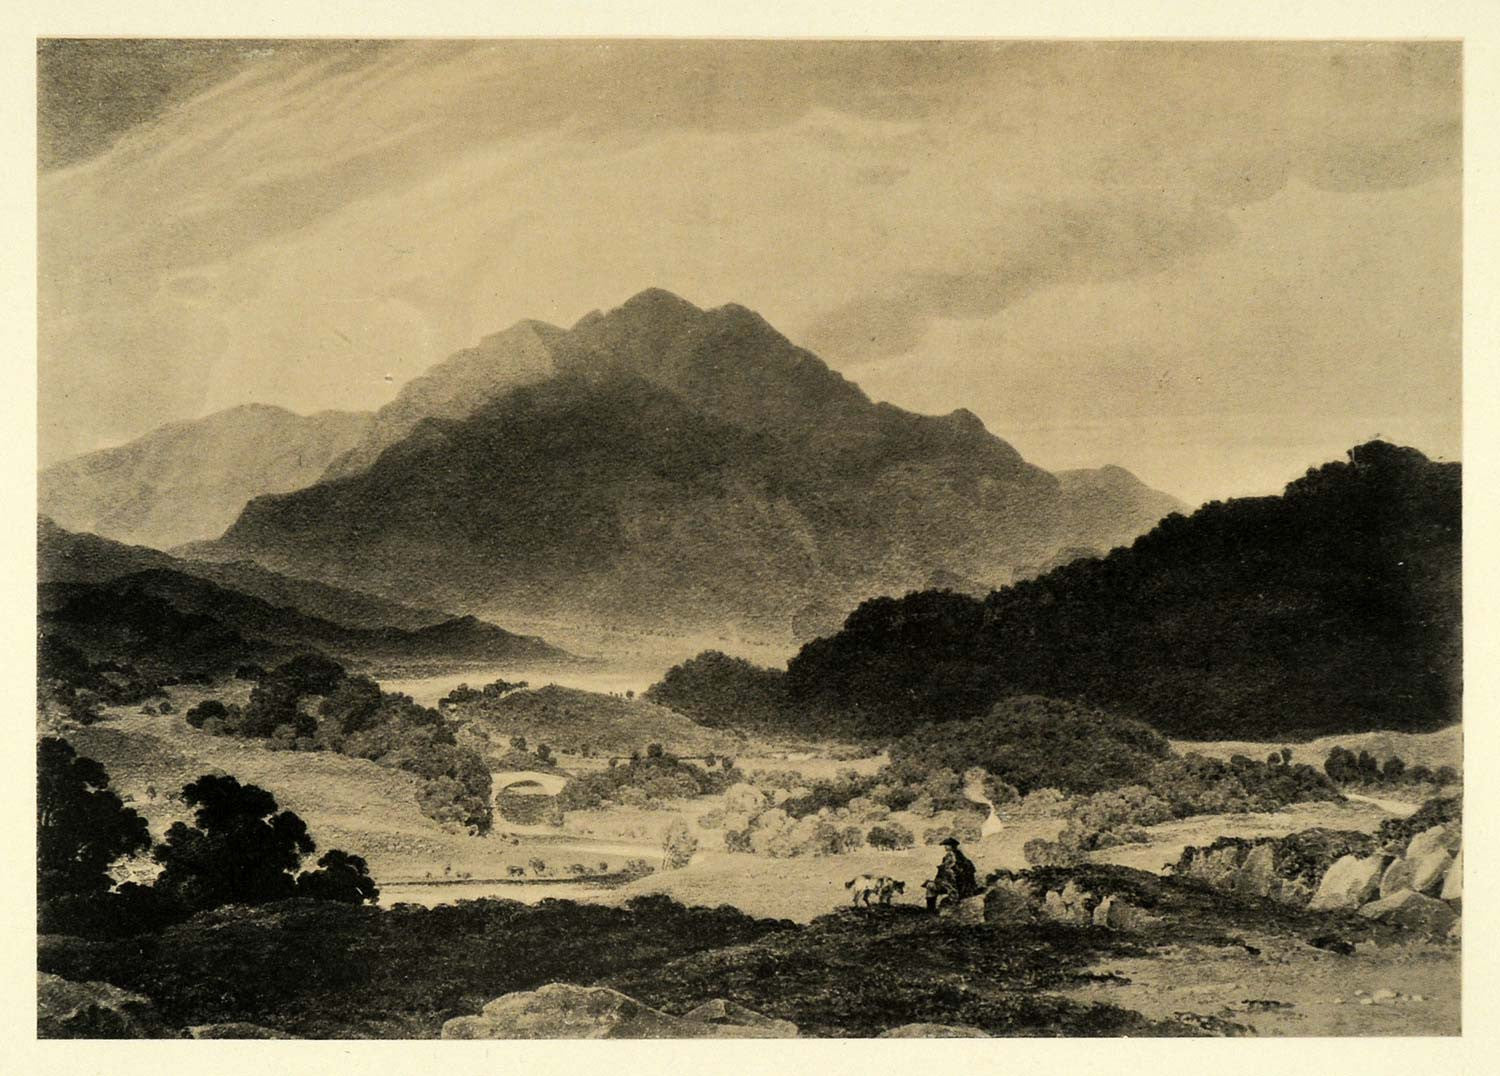 1919 Print Ben Venue Scotland Mountain Landscape George Fennell Robson XAC9 - Period Paper
